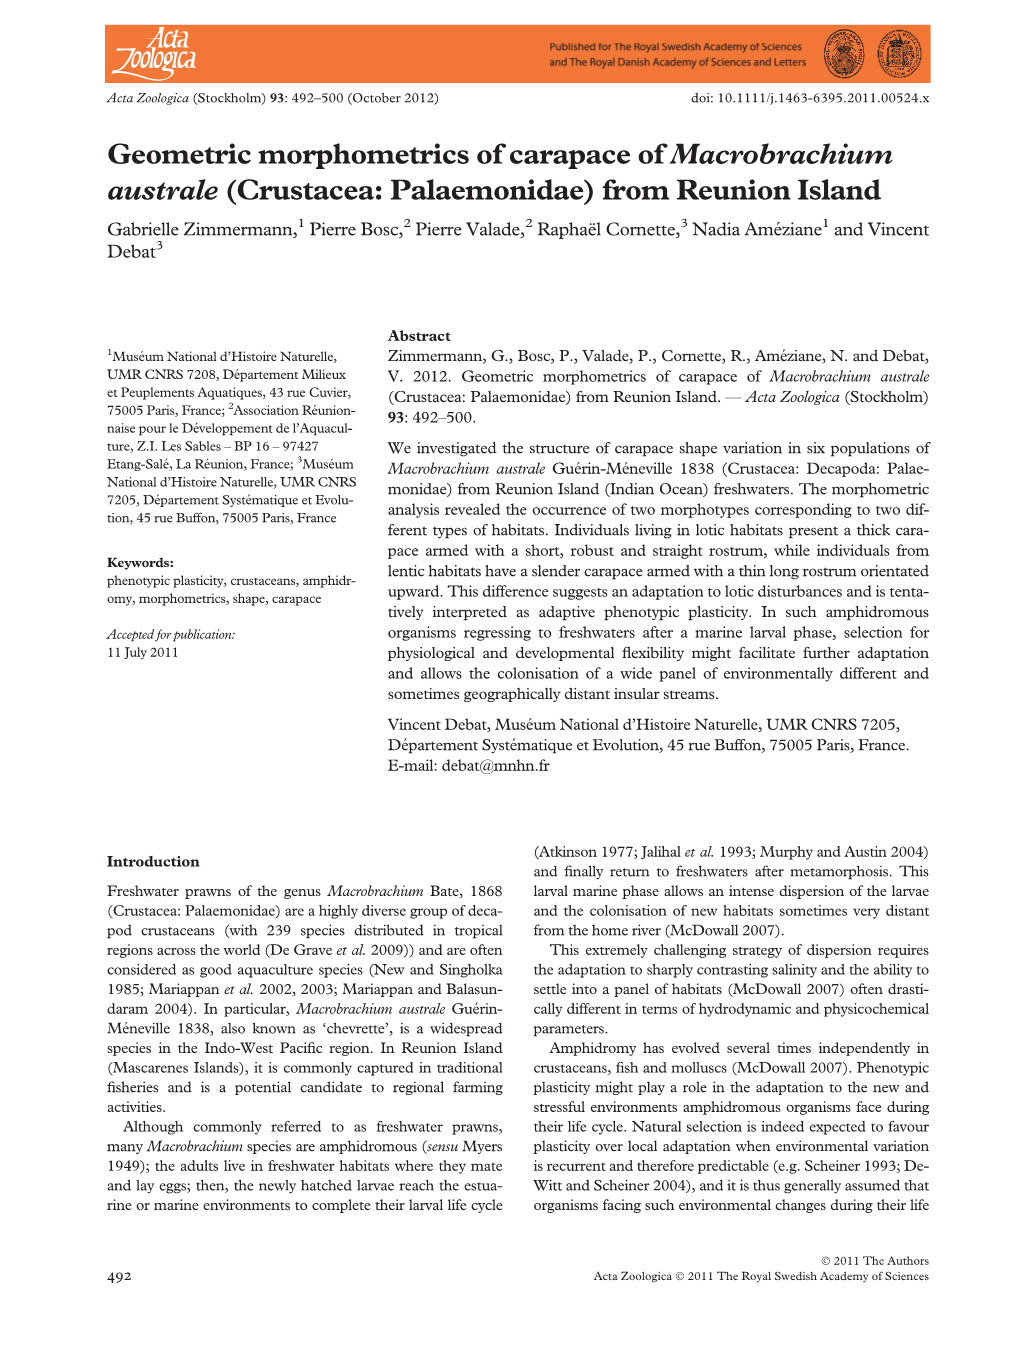 Geometric Morphometrics of Carapace of Macrobrachium Australe